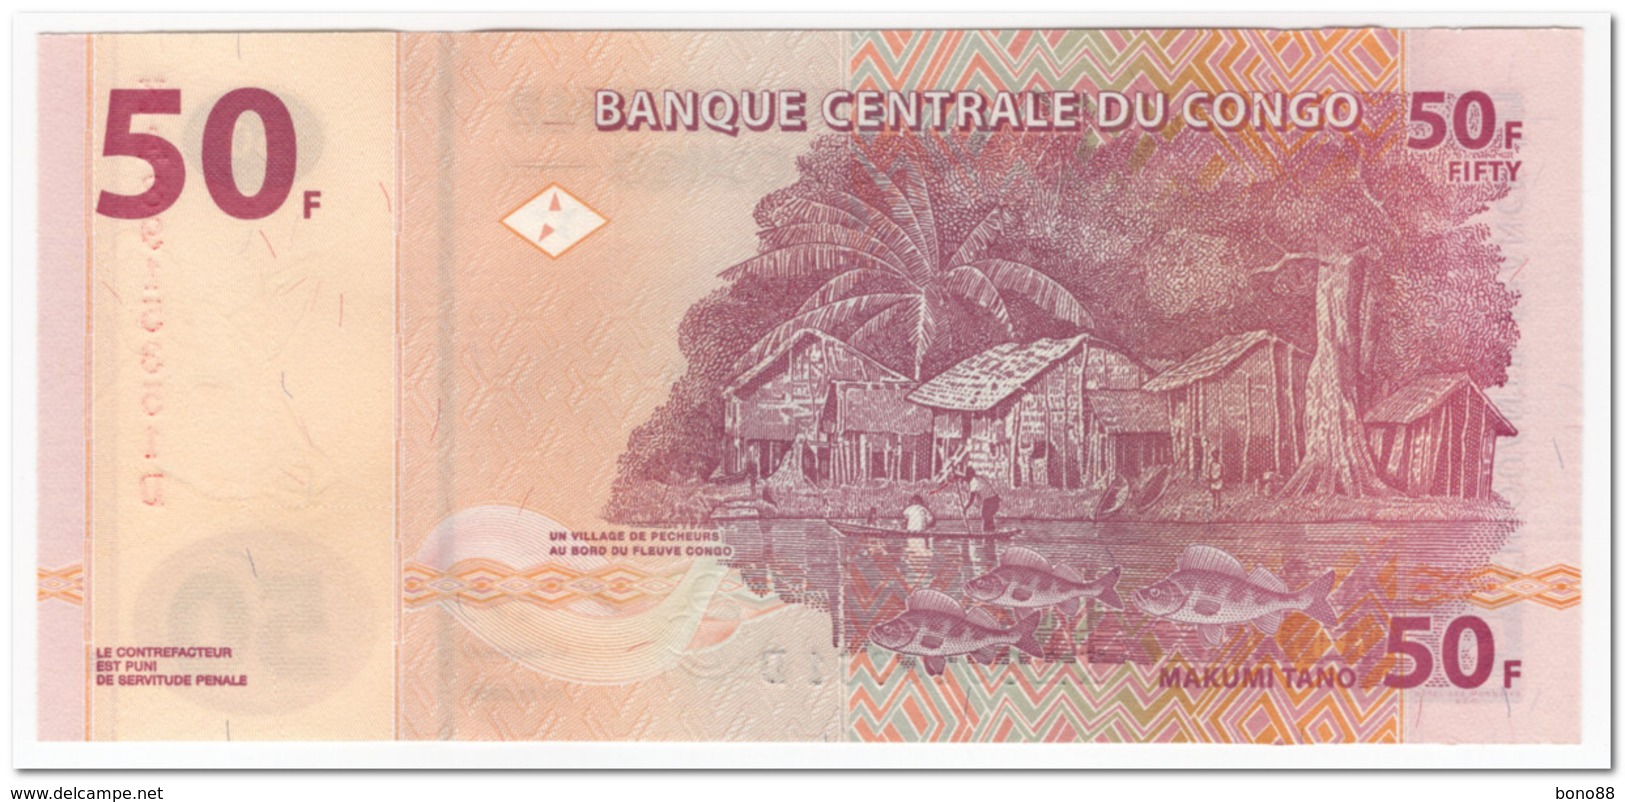 CONGO,50 FRANCS,2000,P.91,UNC - Democratic Republic Of The Congo & Zaire